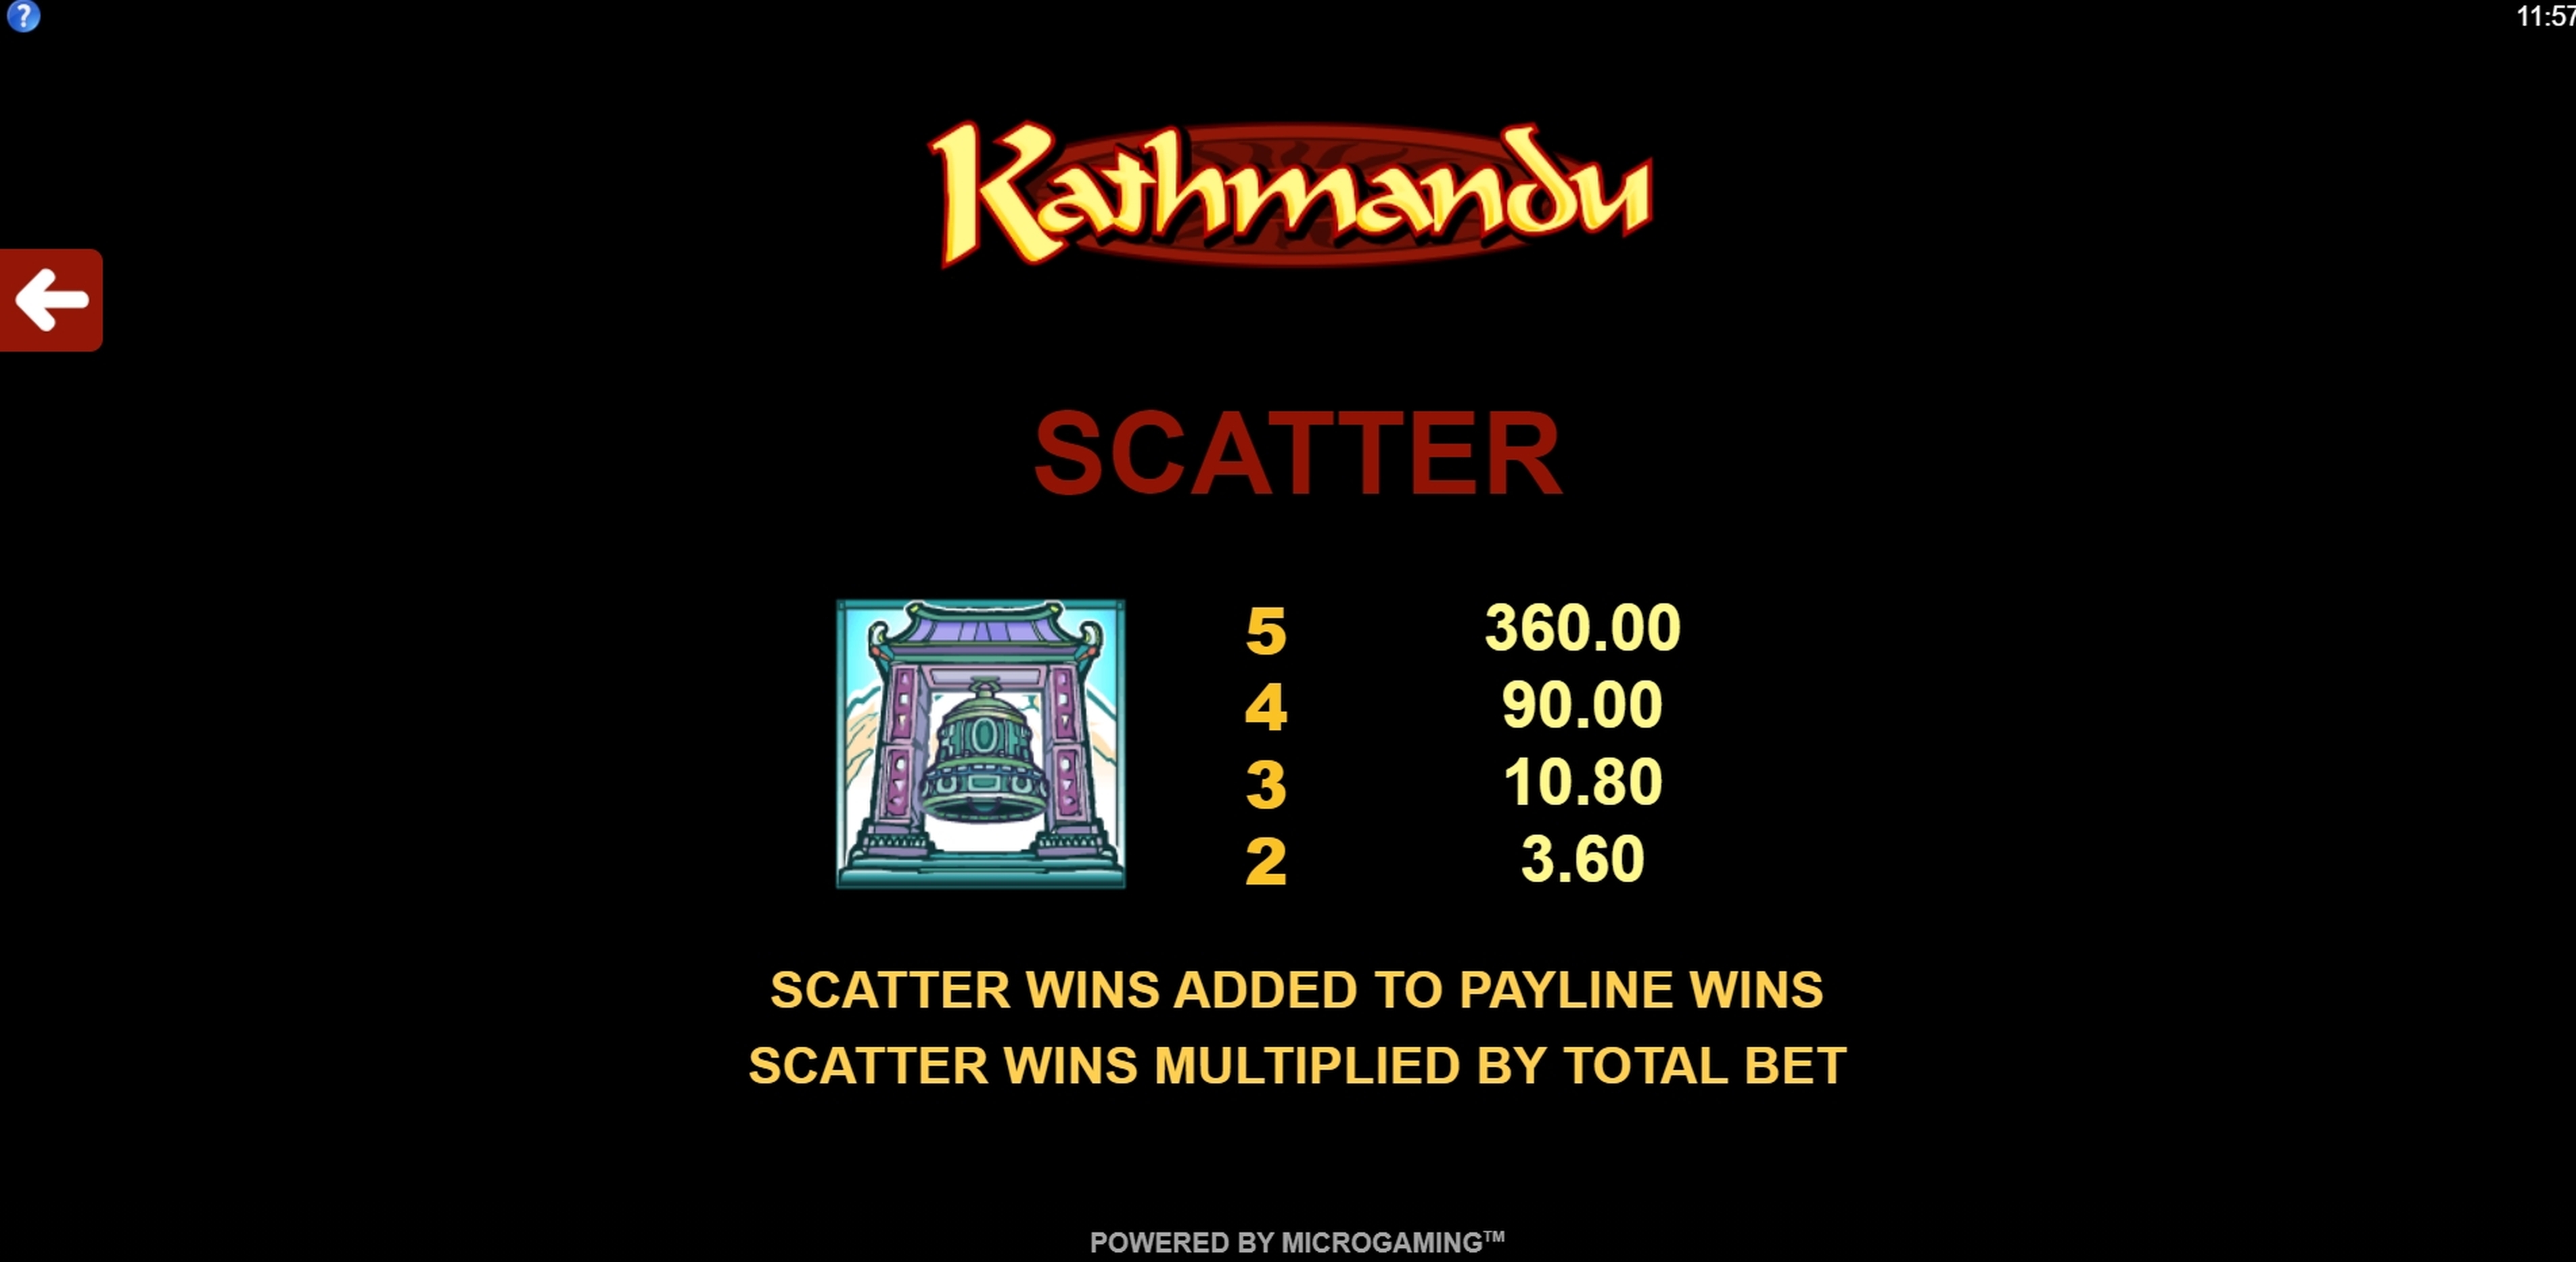 Info of Kathmandu Slot Game by Microgaming